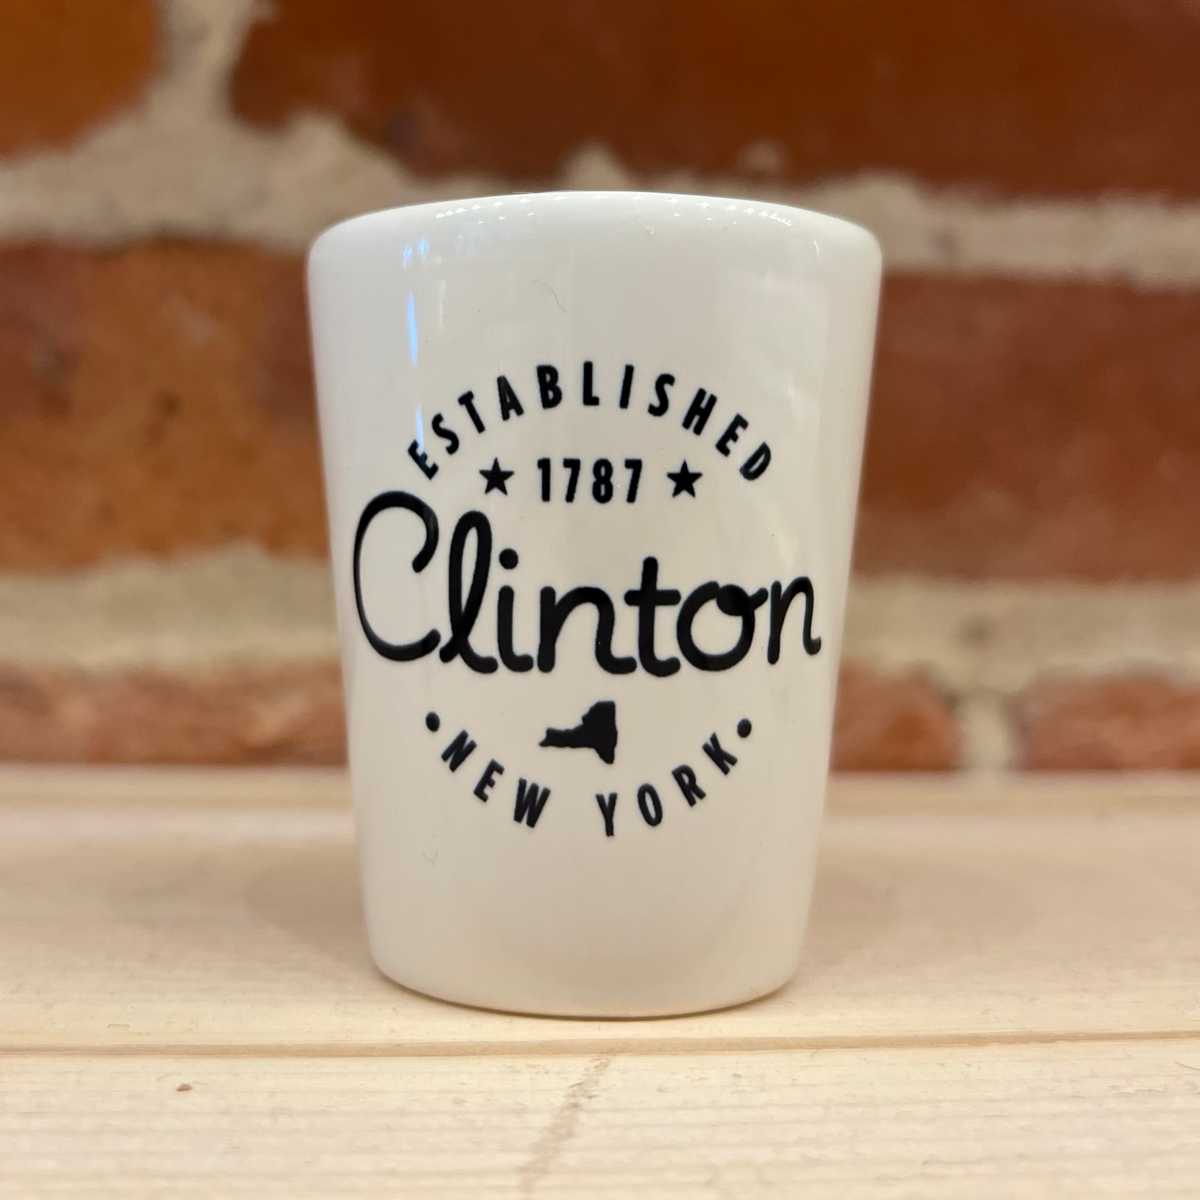 Clinton New York Shot Glass